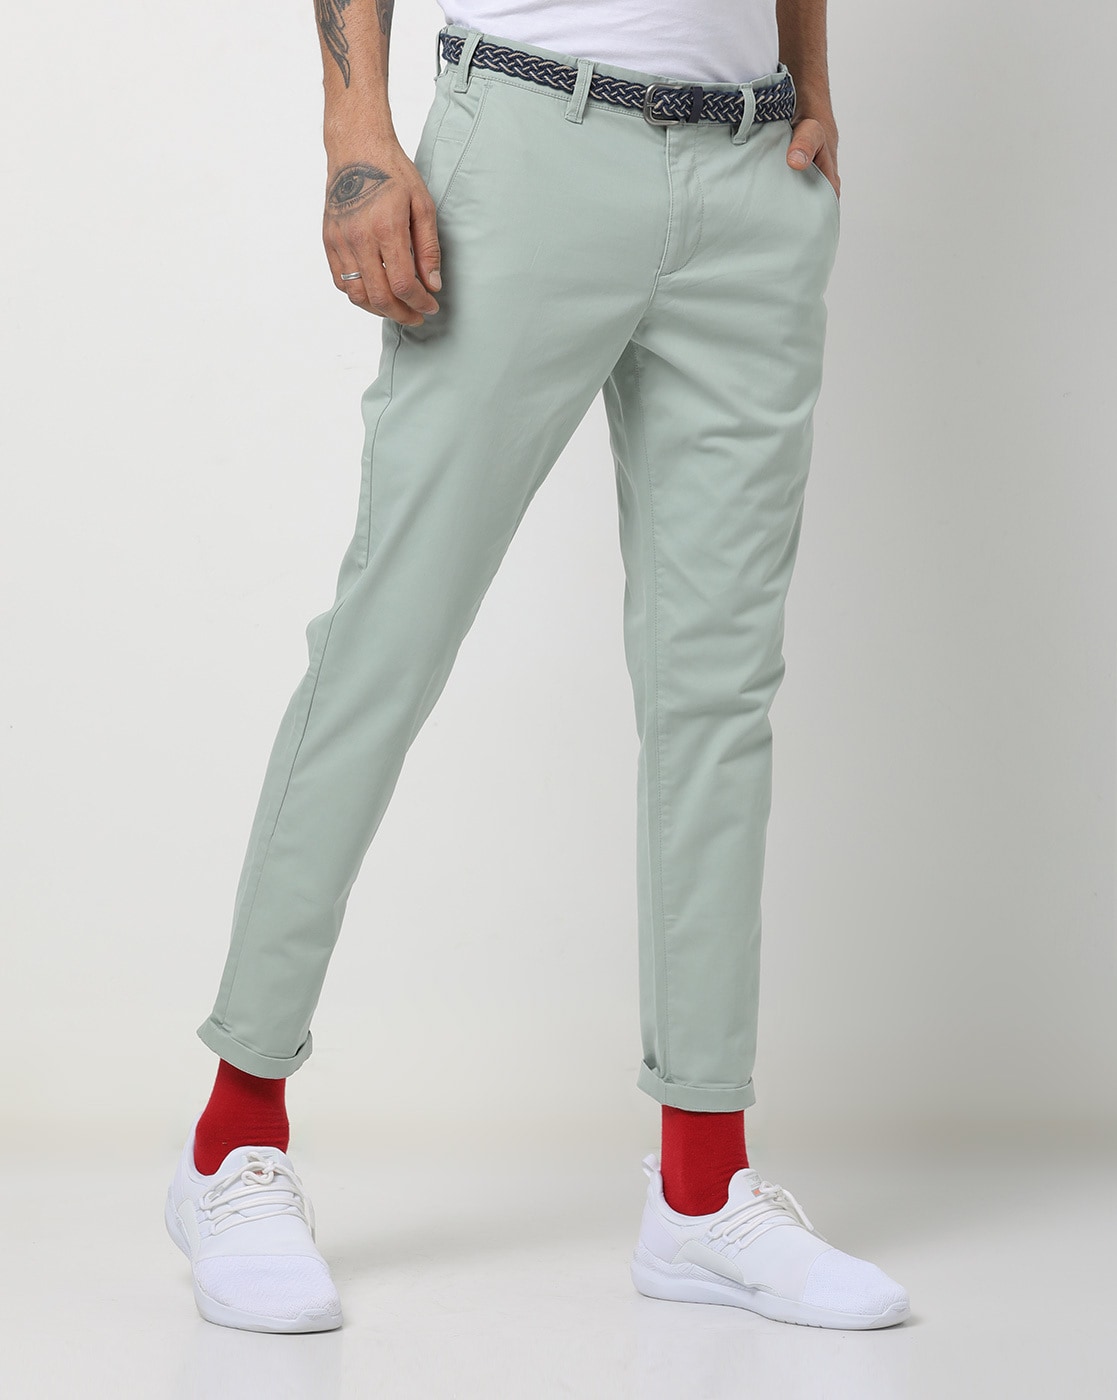 Buy Light Grey Trousers  Pants for Men by LOUIS PHILIPPE Online  Ajiocom